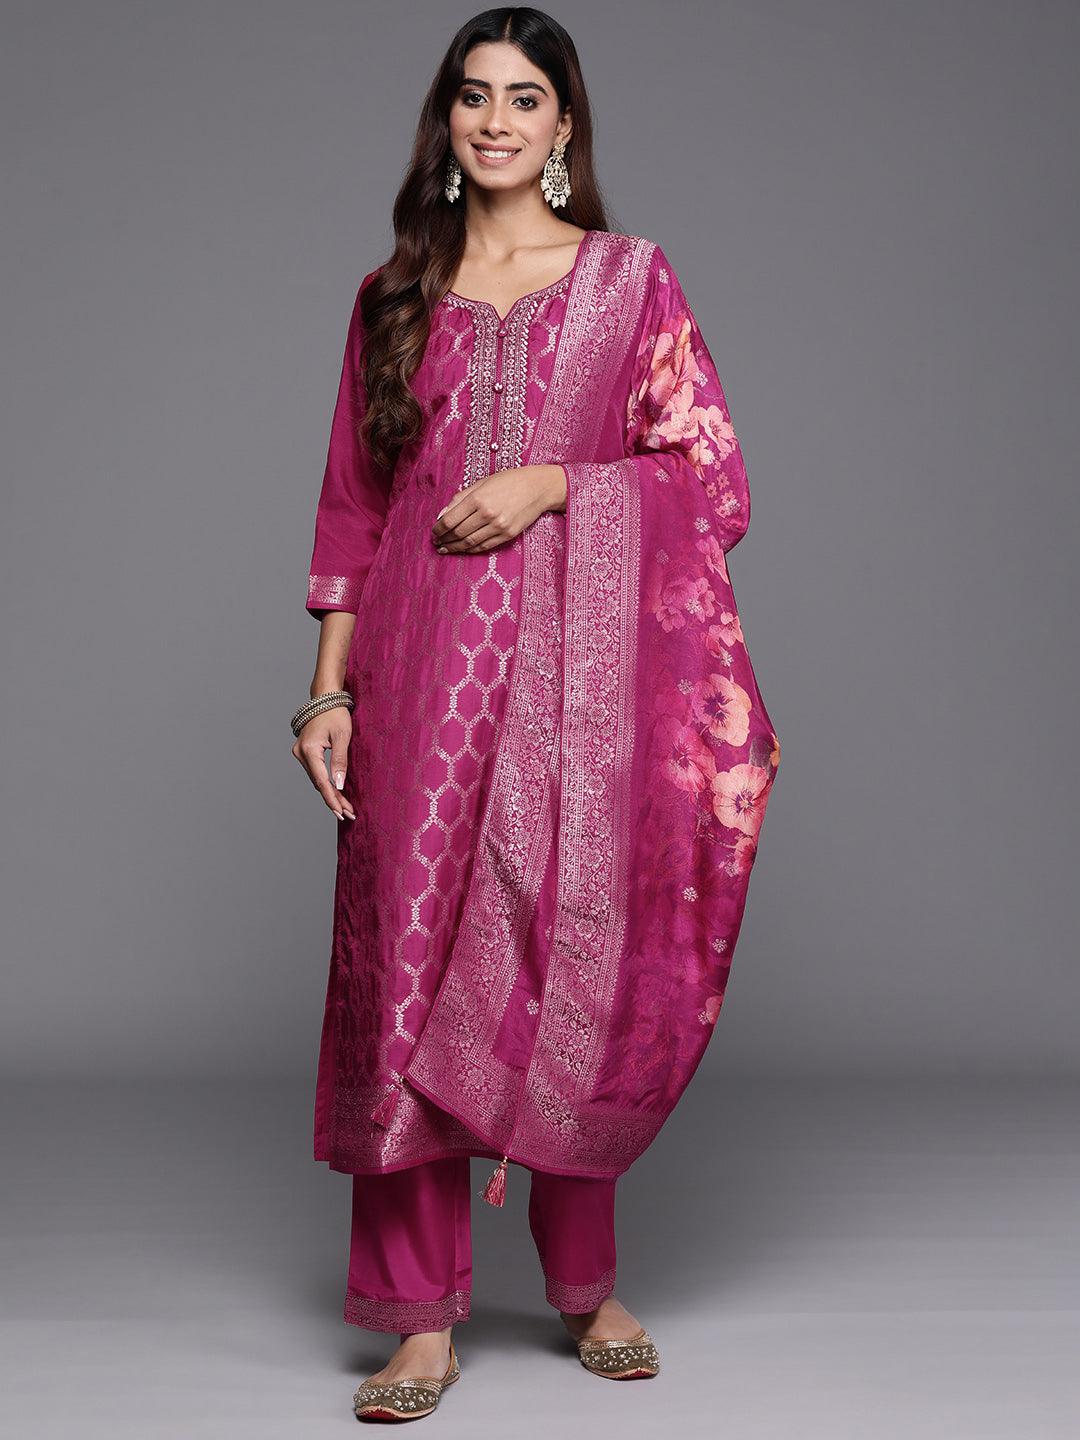 Magenta Woven Design Silk Blend Straight Suit With Dupatta - Libas